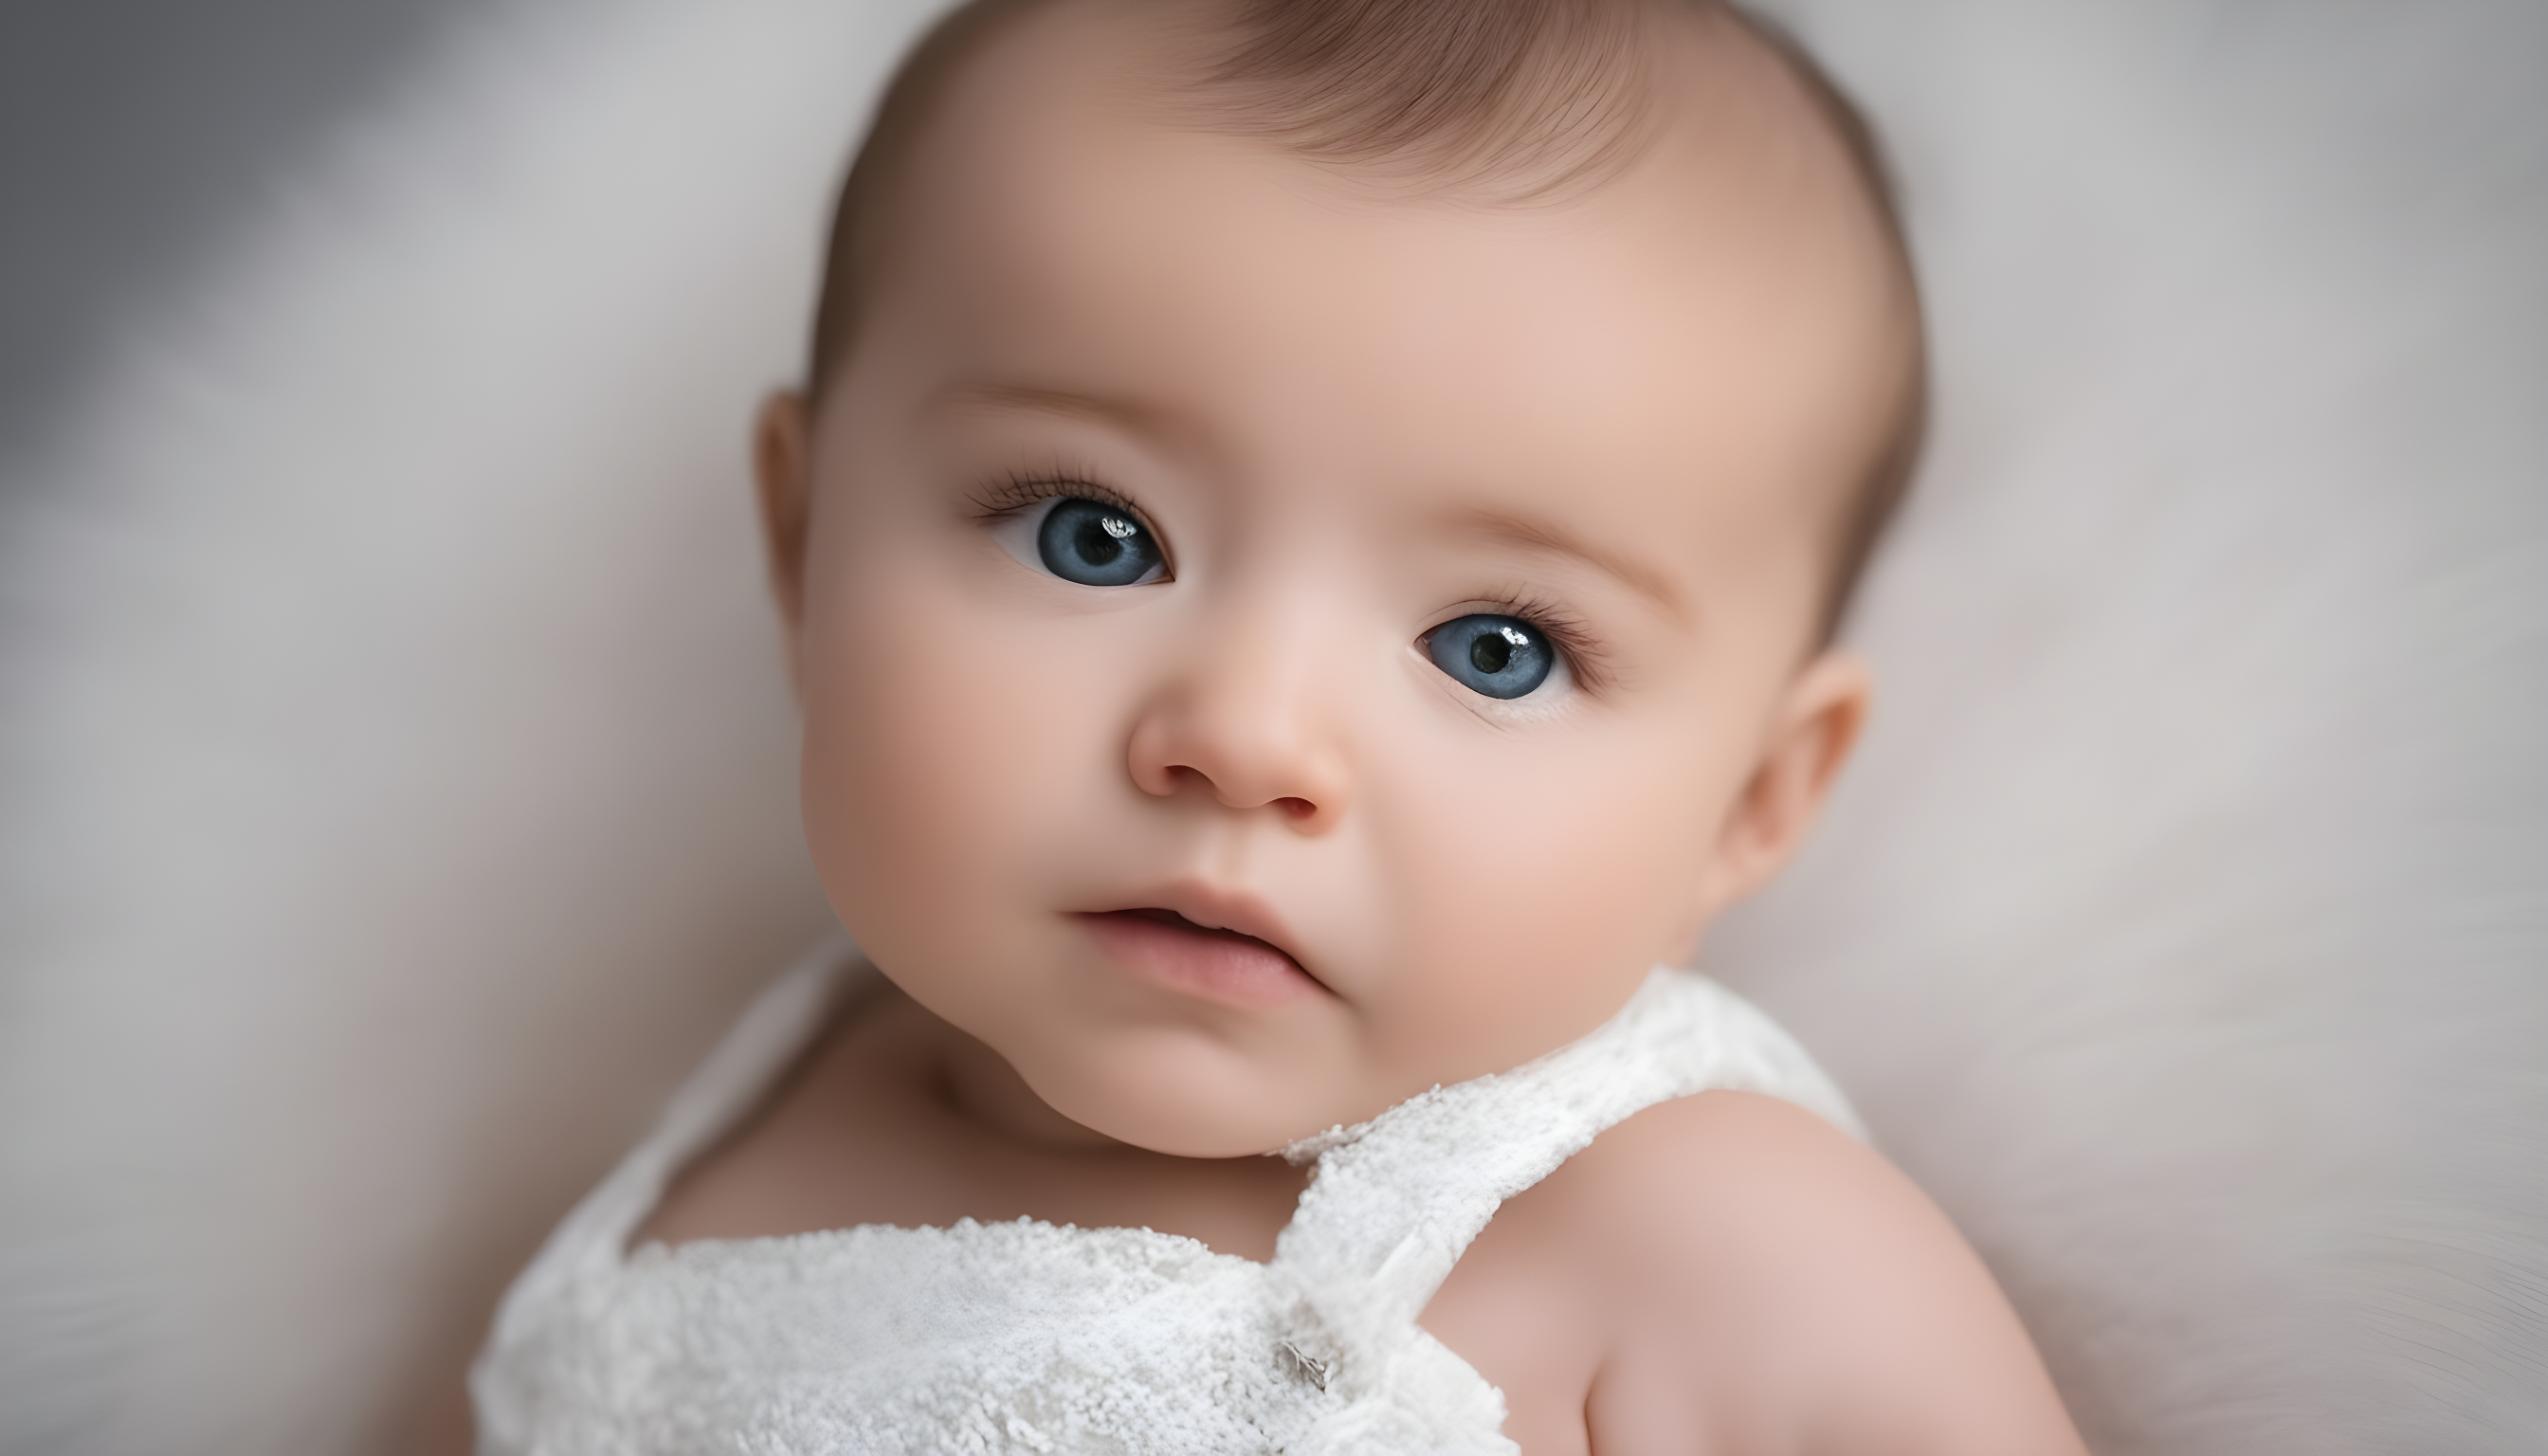 5-Month-Old Baby: Development and Milestones